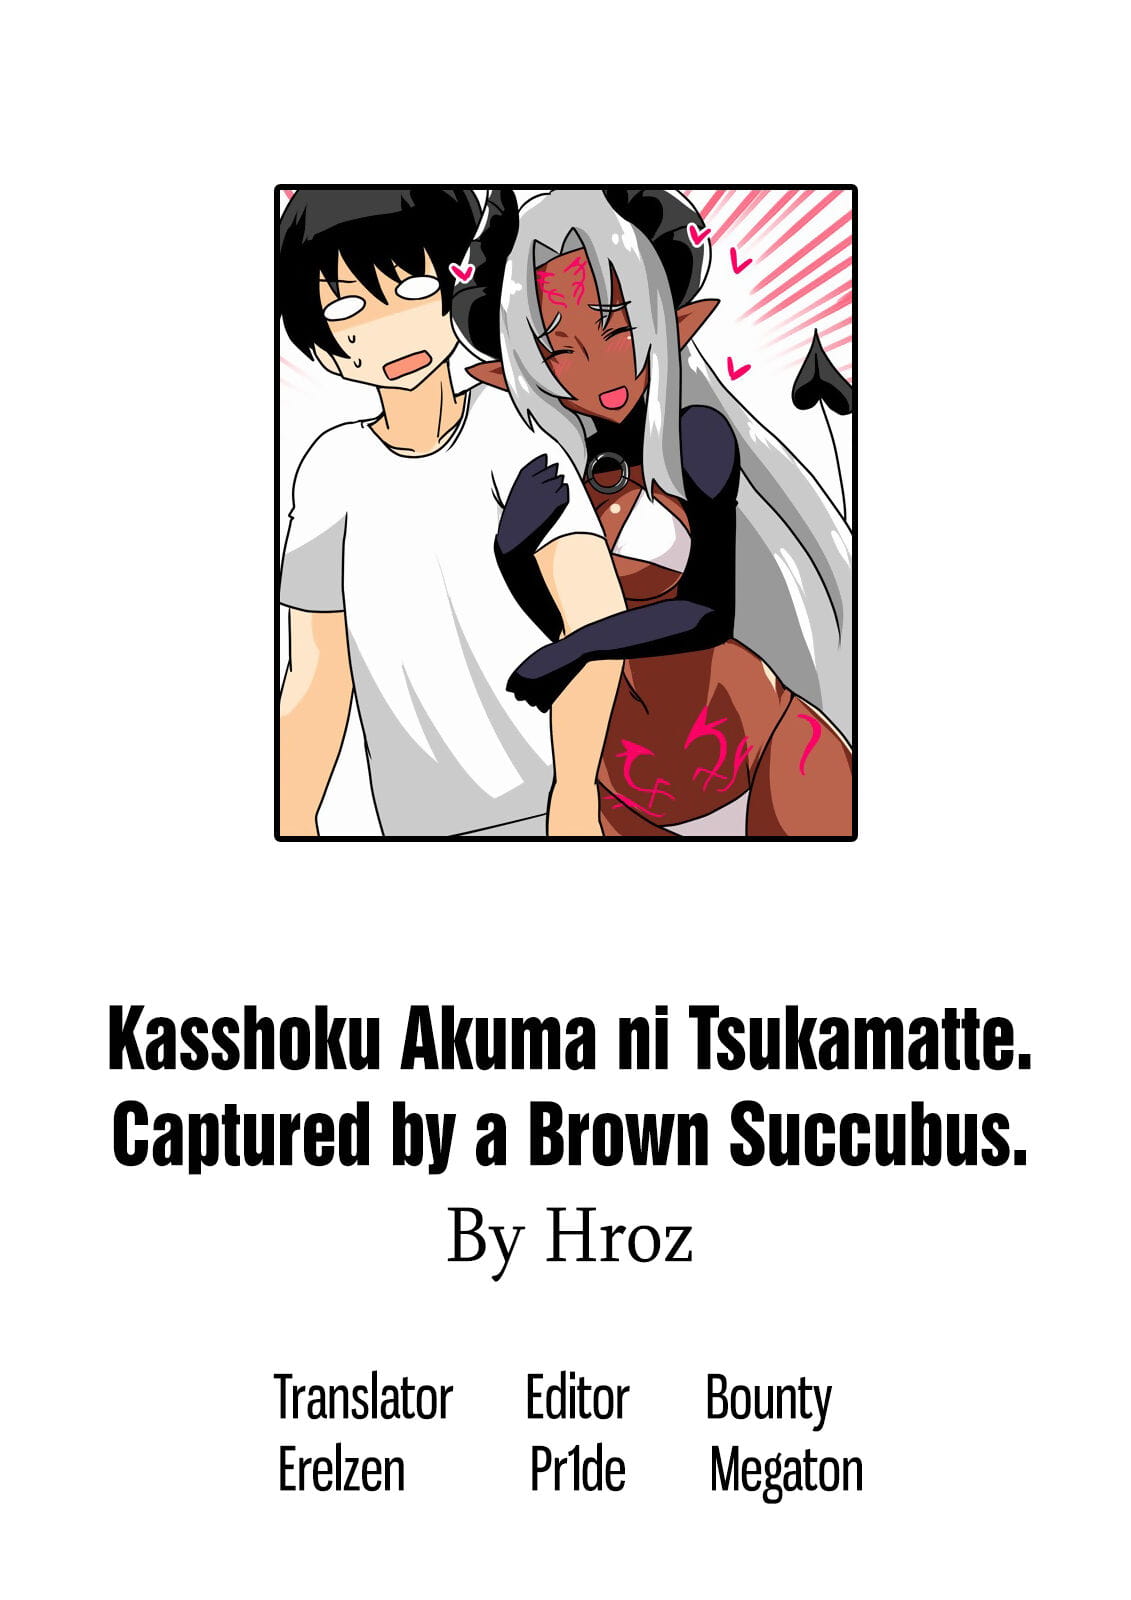 kasshoku akuma ดี tsukamatte. จับตัว โดย เป็ สีน้ำตาล ศา page 1